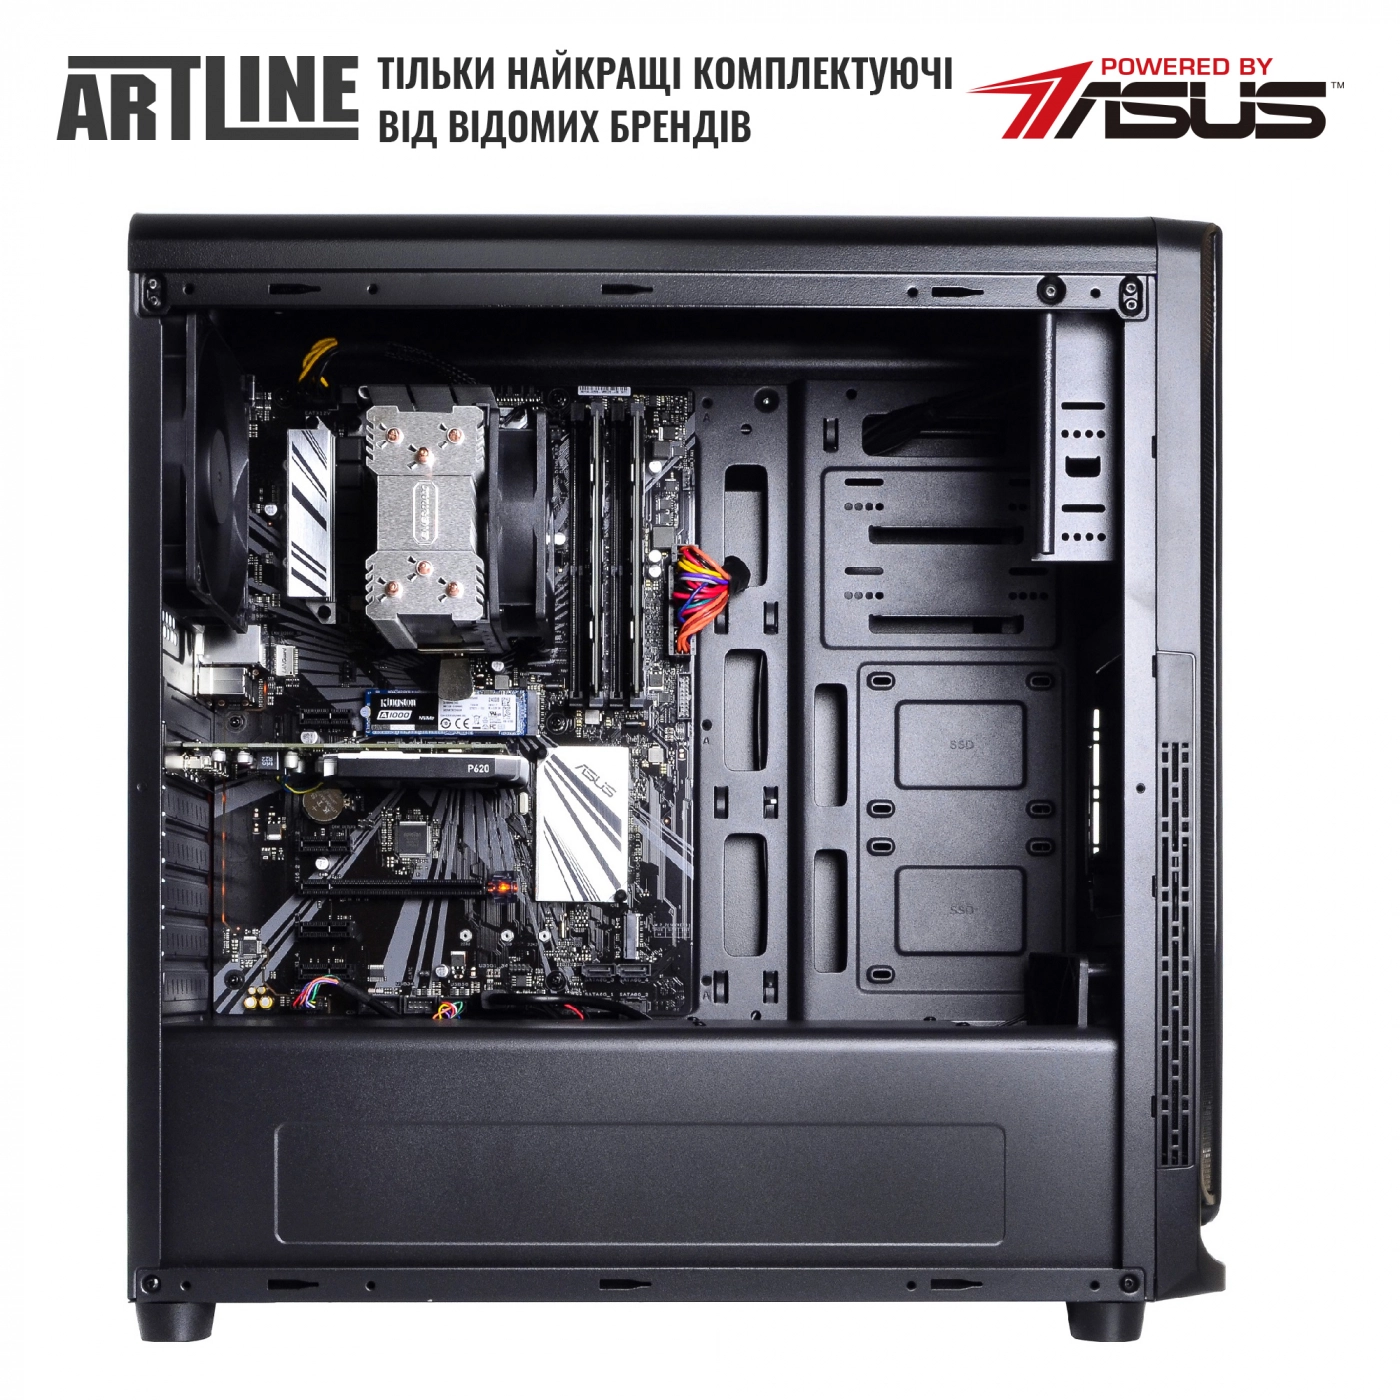 Купити Сервер ARTLINE Business T27v18 - фото 5